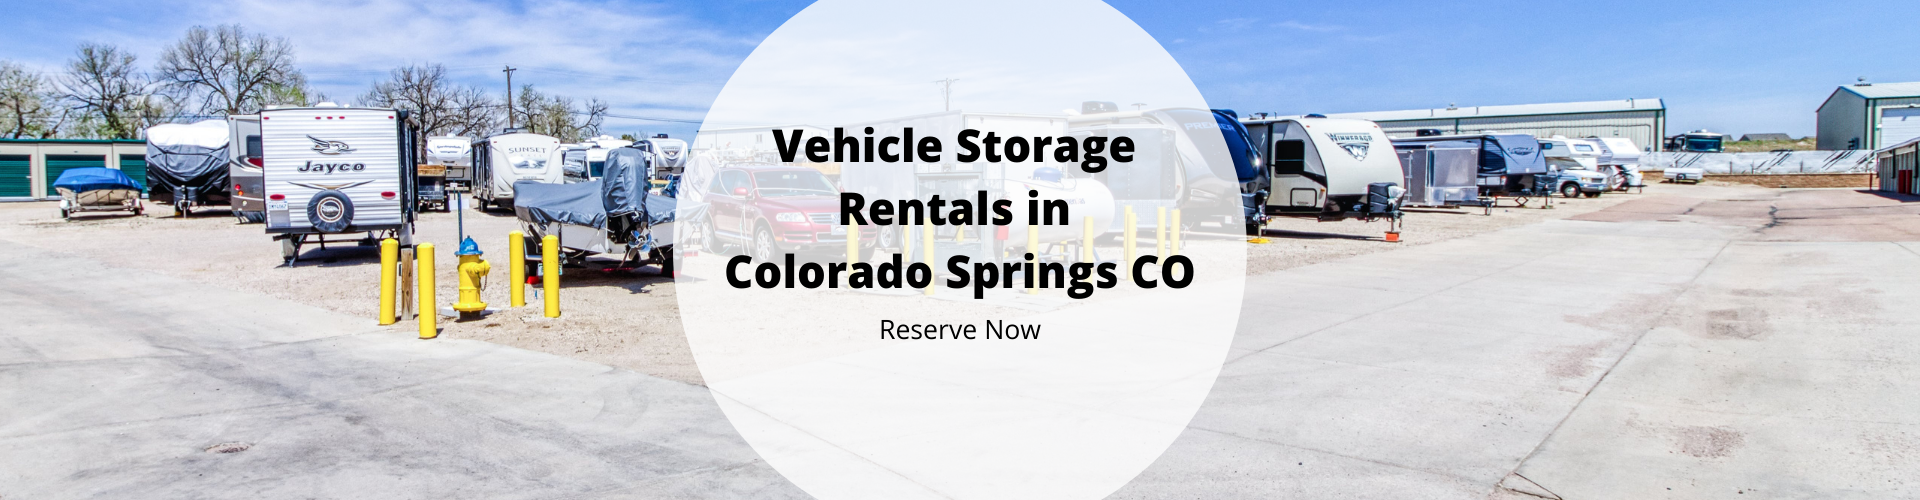 Vehicle Storage Rentals in Colorado Springs CO: Reserve Now